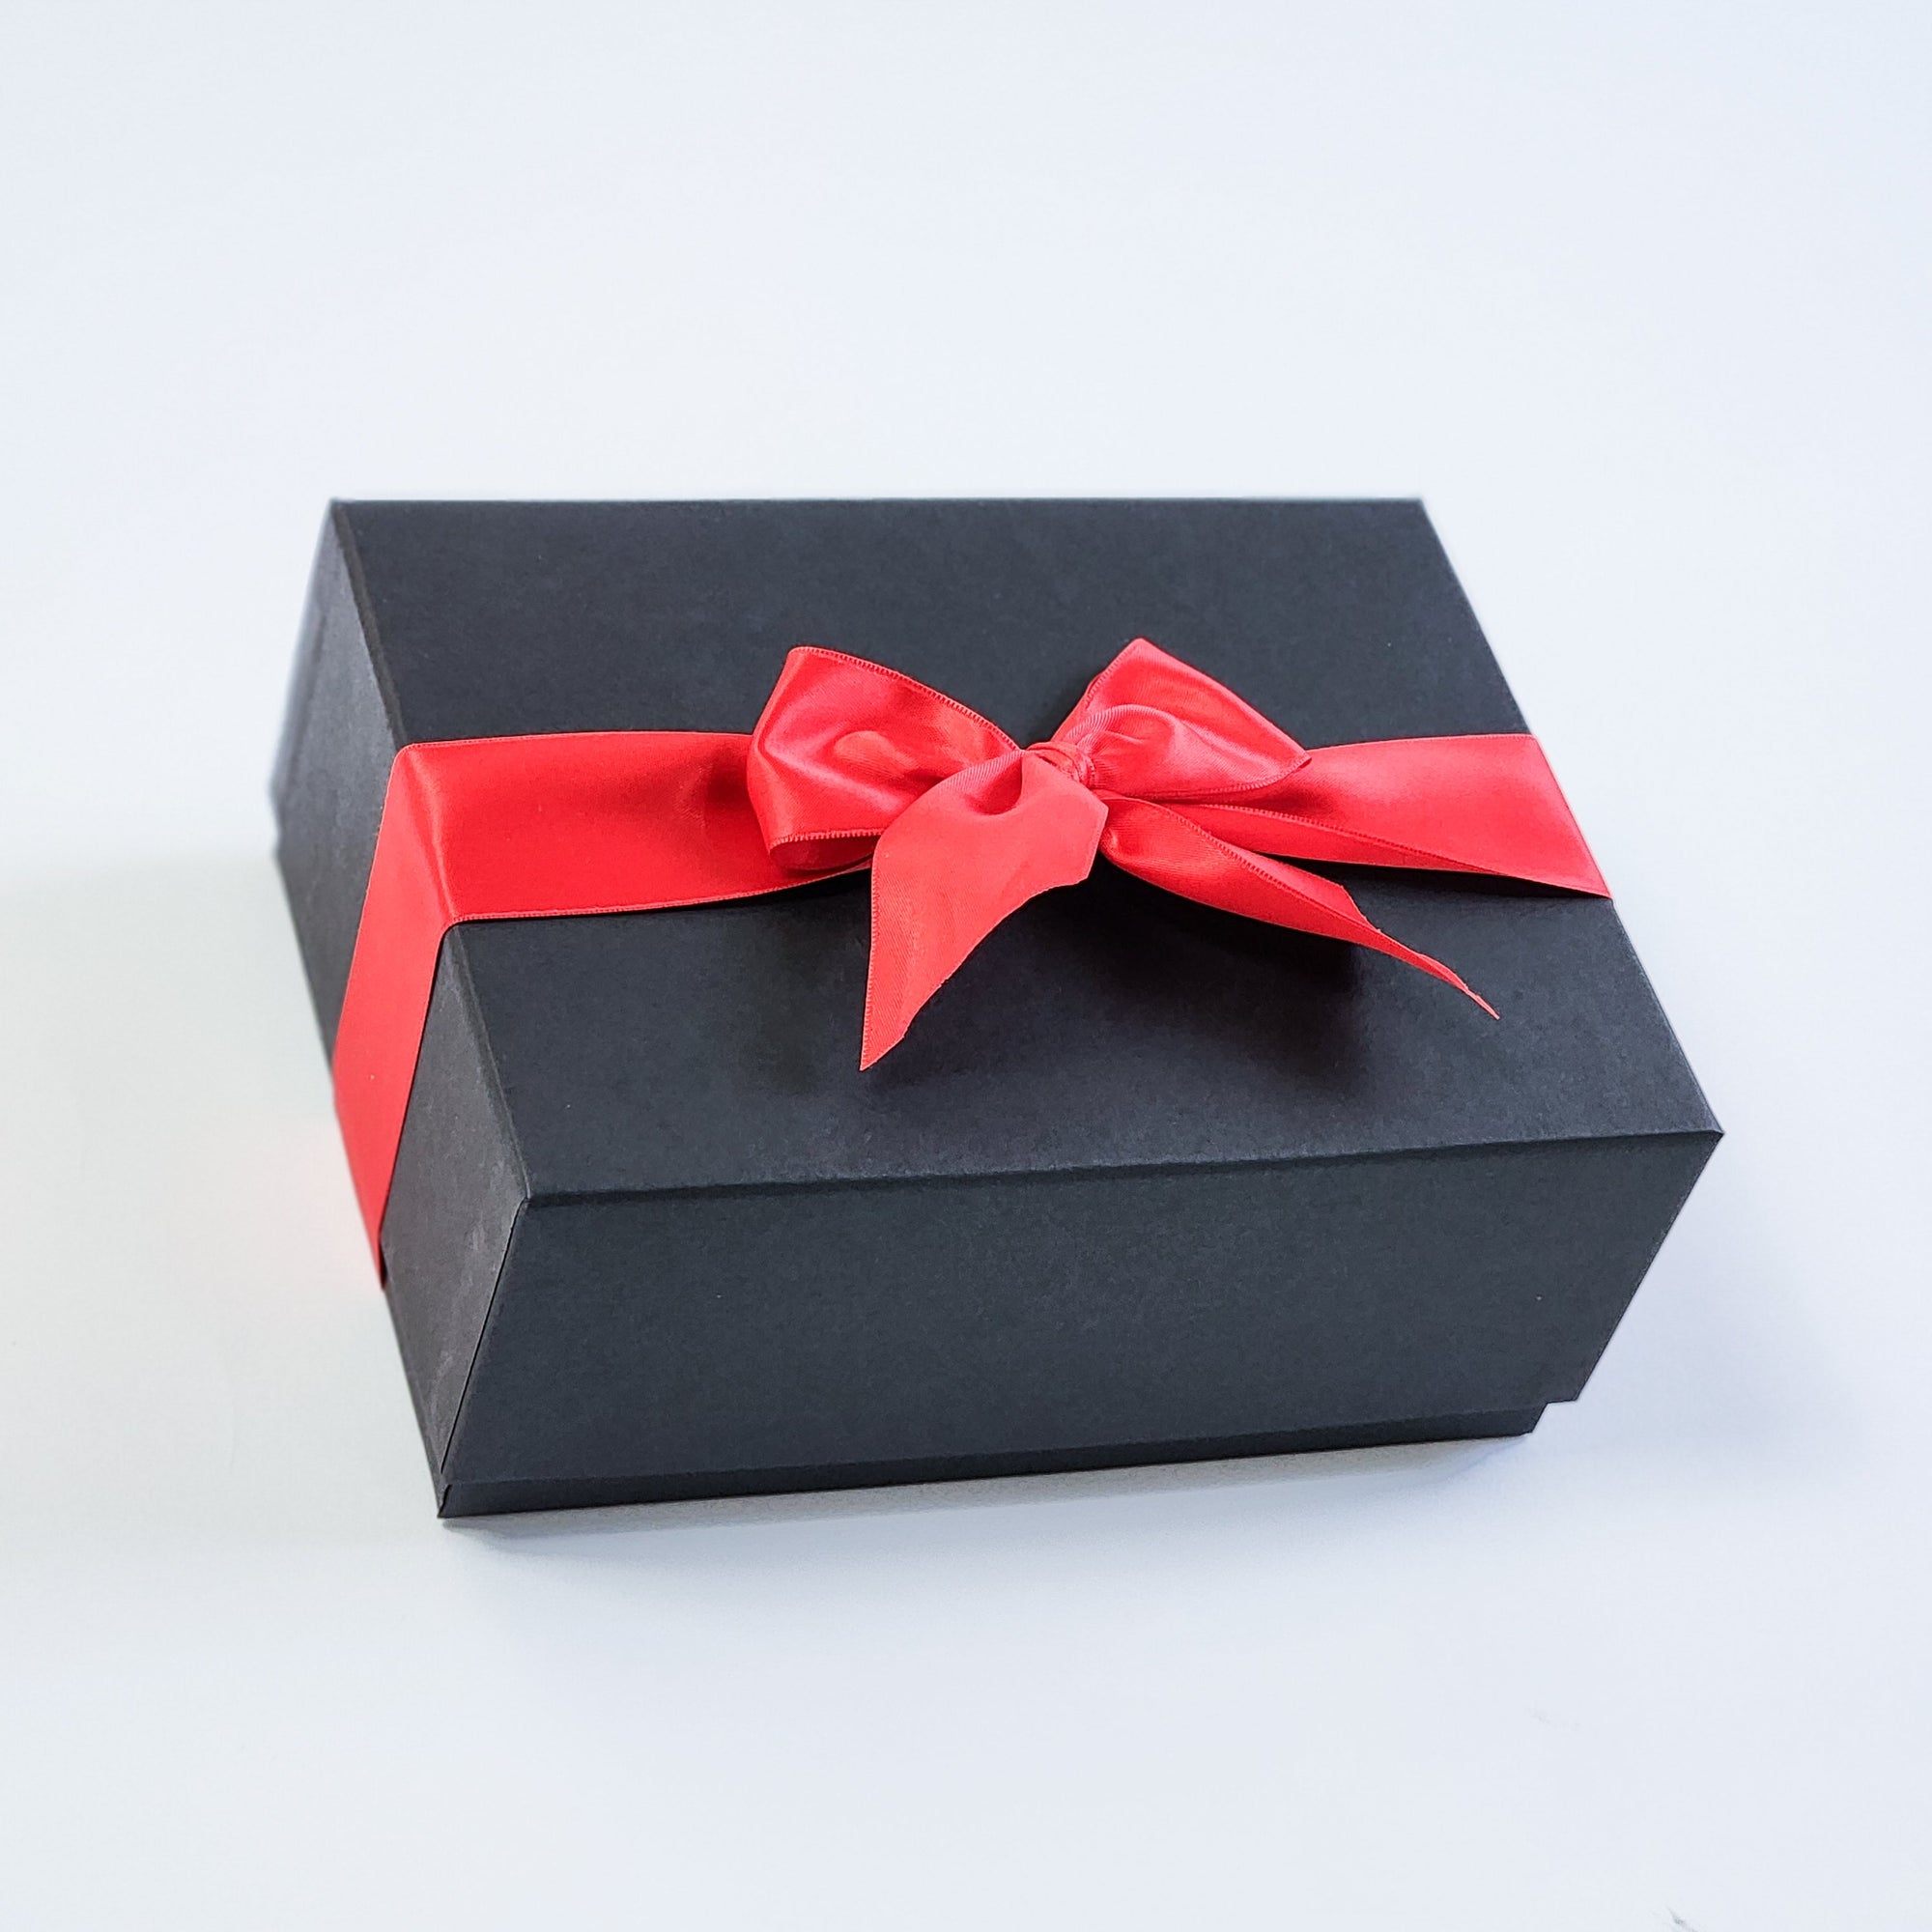 REACHDESK - Treats for All Gift Box